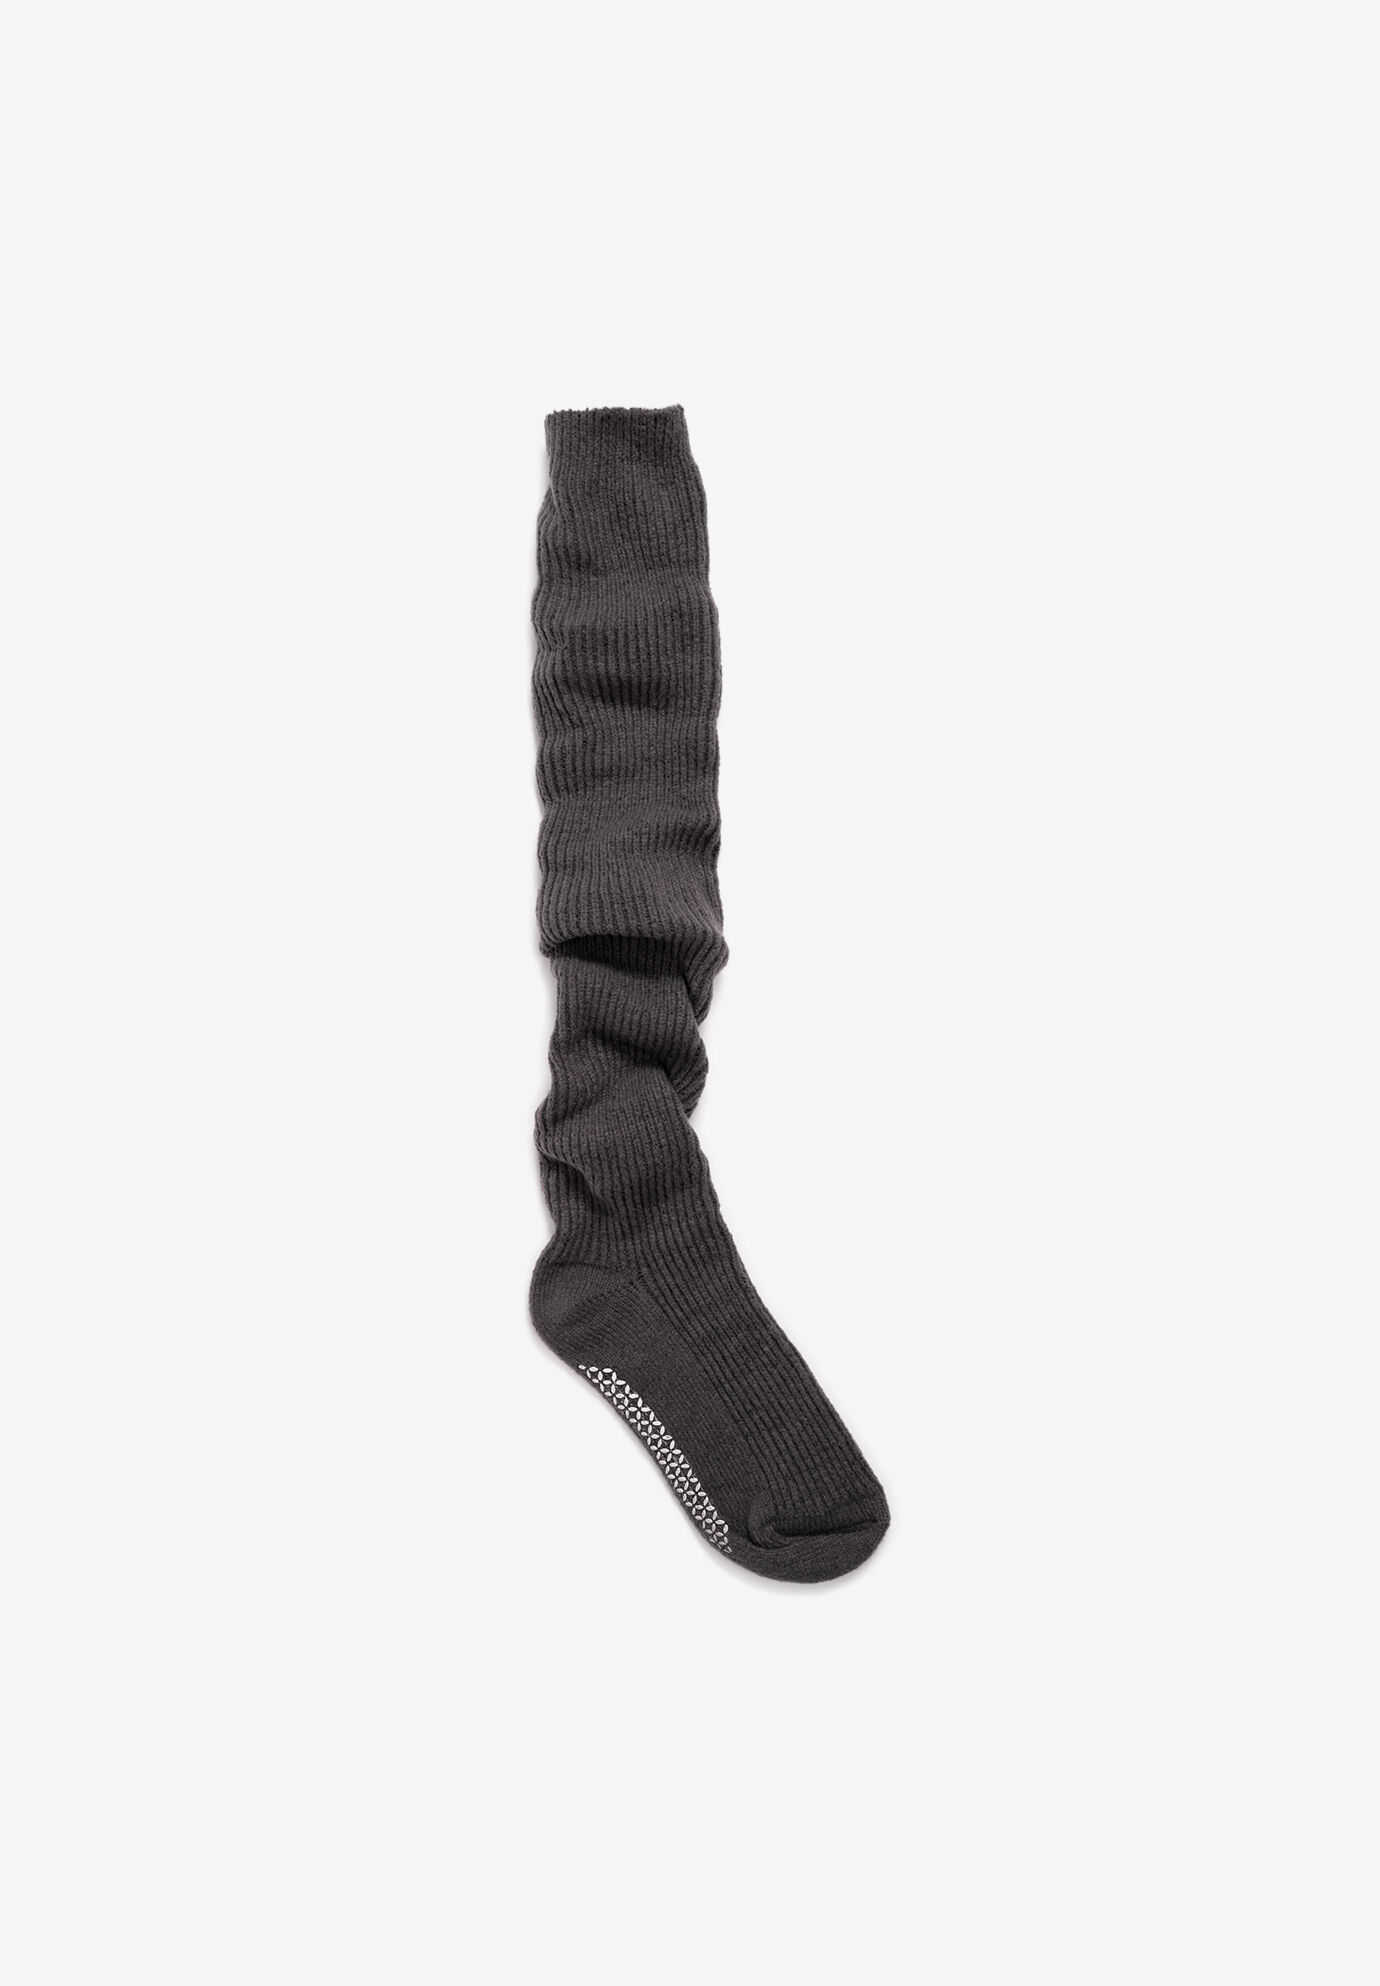 Women's Over The Knee Slouchy Socks by Kathy Ireland in Dark Grey Heather (Size ONE)